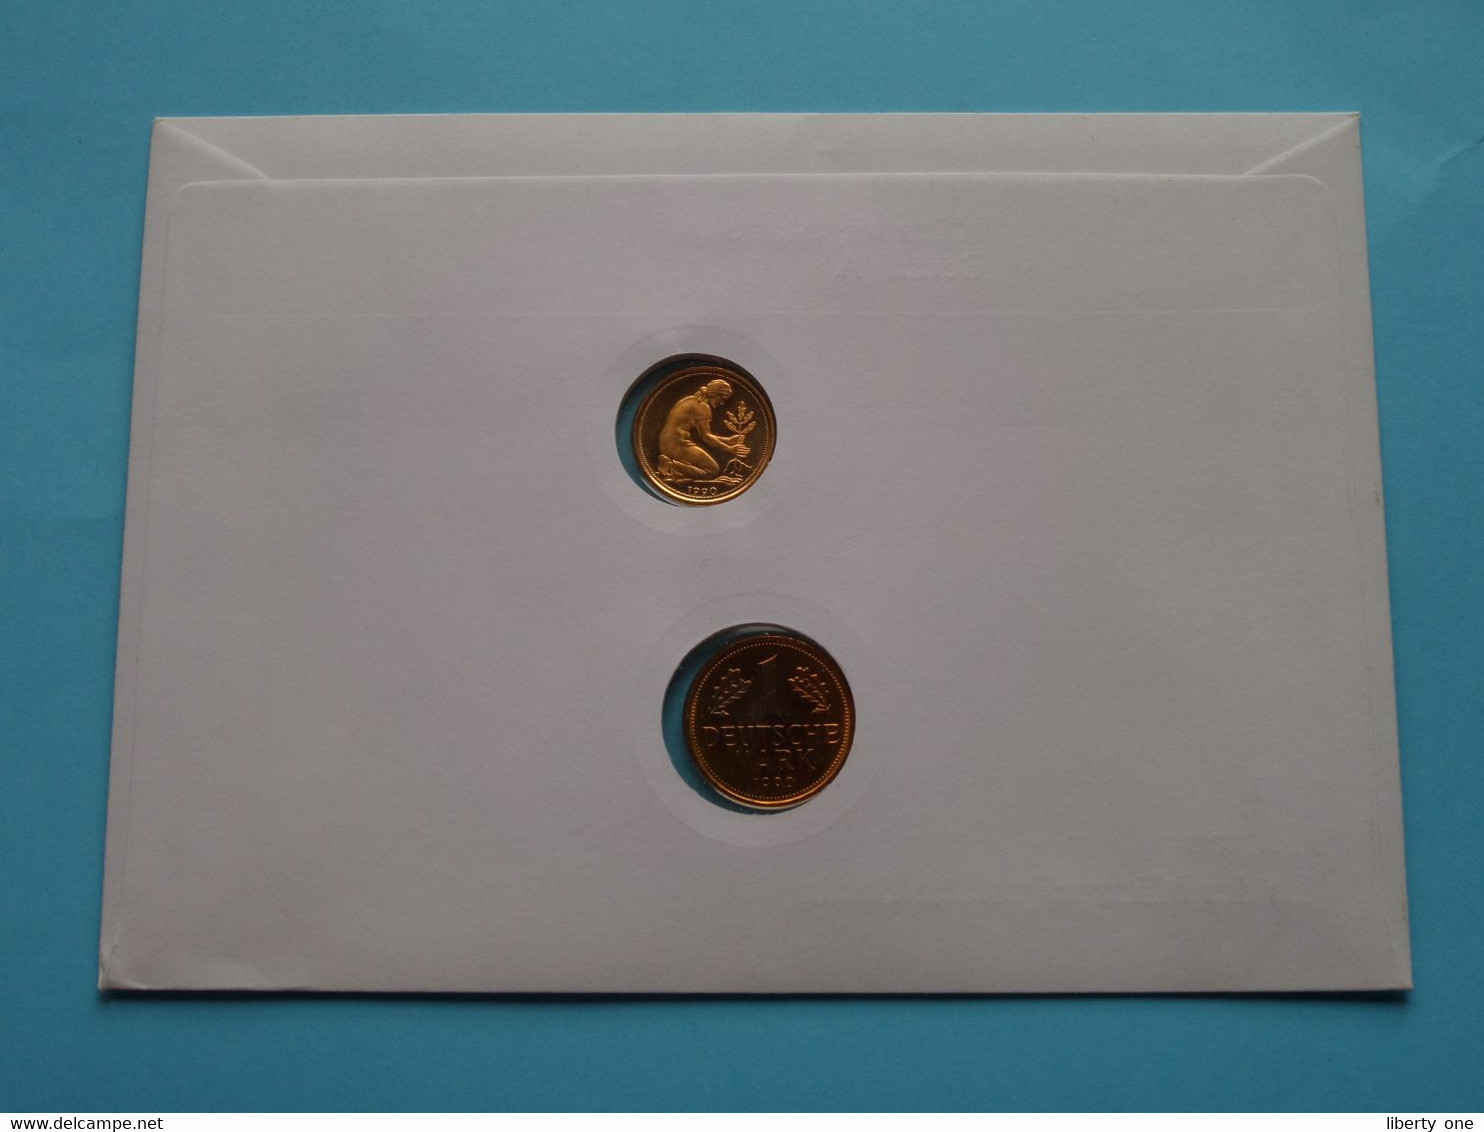 DM-Münzen Aus Der Münzprägestätte BERLIN (A) > ( Stamp > Berlin 1991 ) N° 01914 ! - Elongated Coins